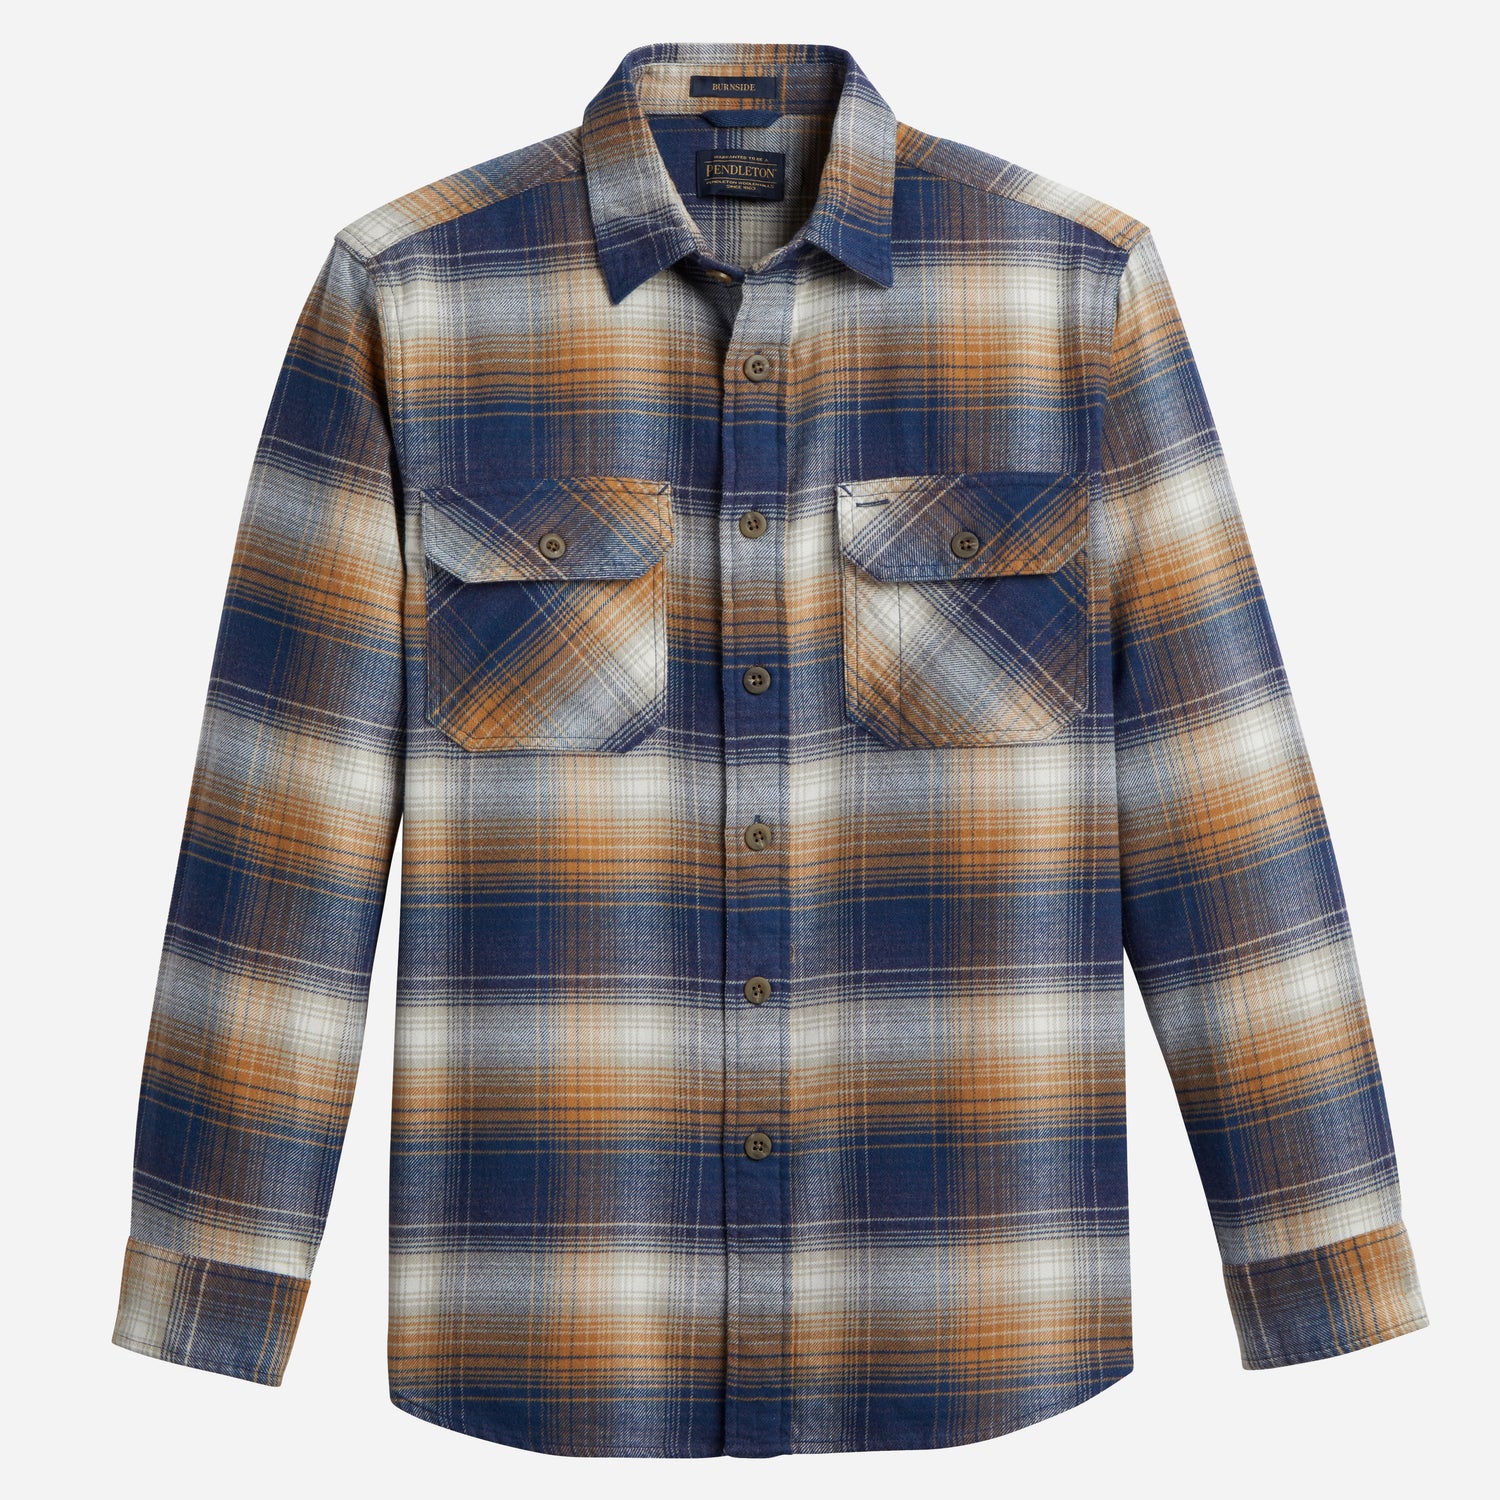 Burnside Flannel Shirt - Navy / Gold / Tan Plaid